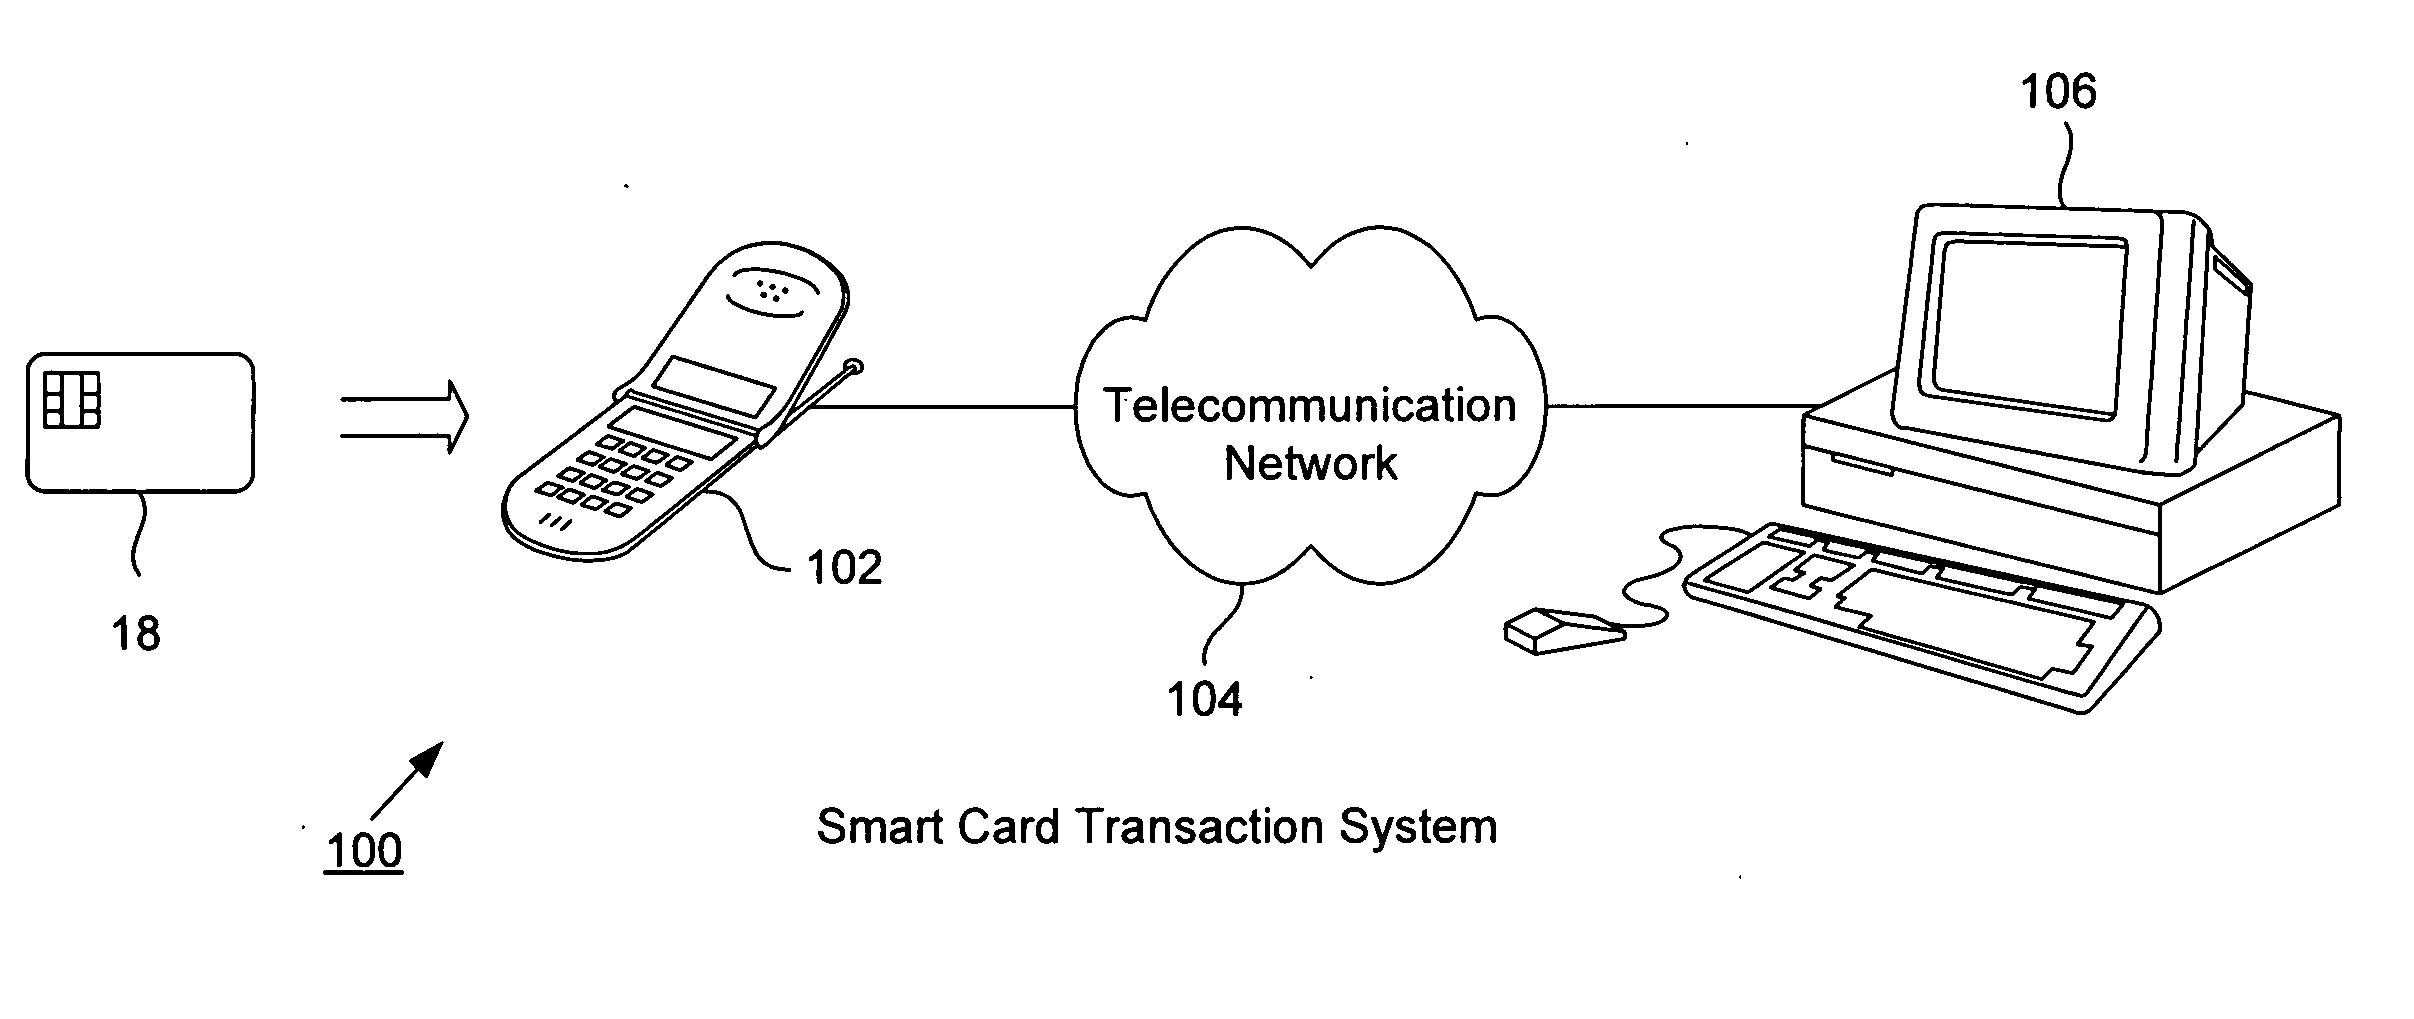 Smart card loading transactions using wireless telecommunications network